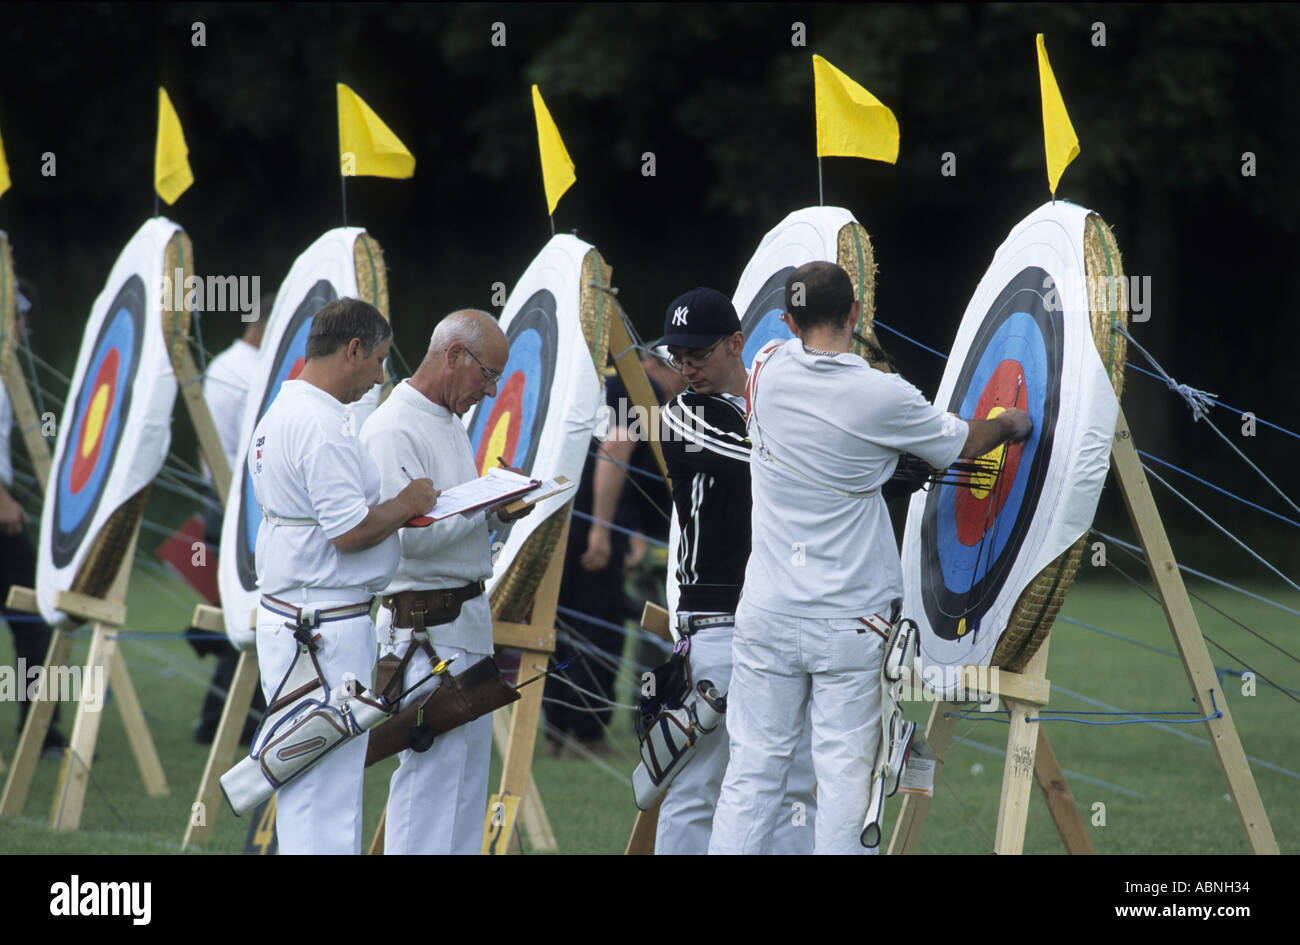 Archers scoring their arrows at Midland Counties Championships, Leamington Spa, Warwickshire, England, UK Stock Photo